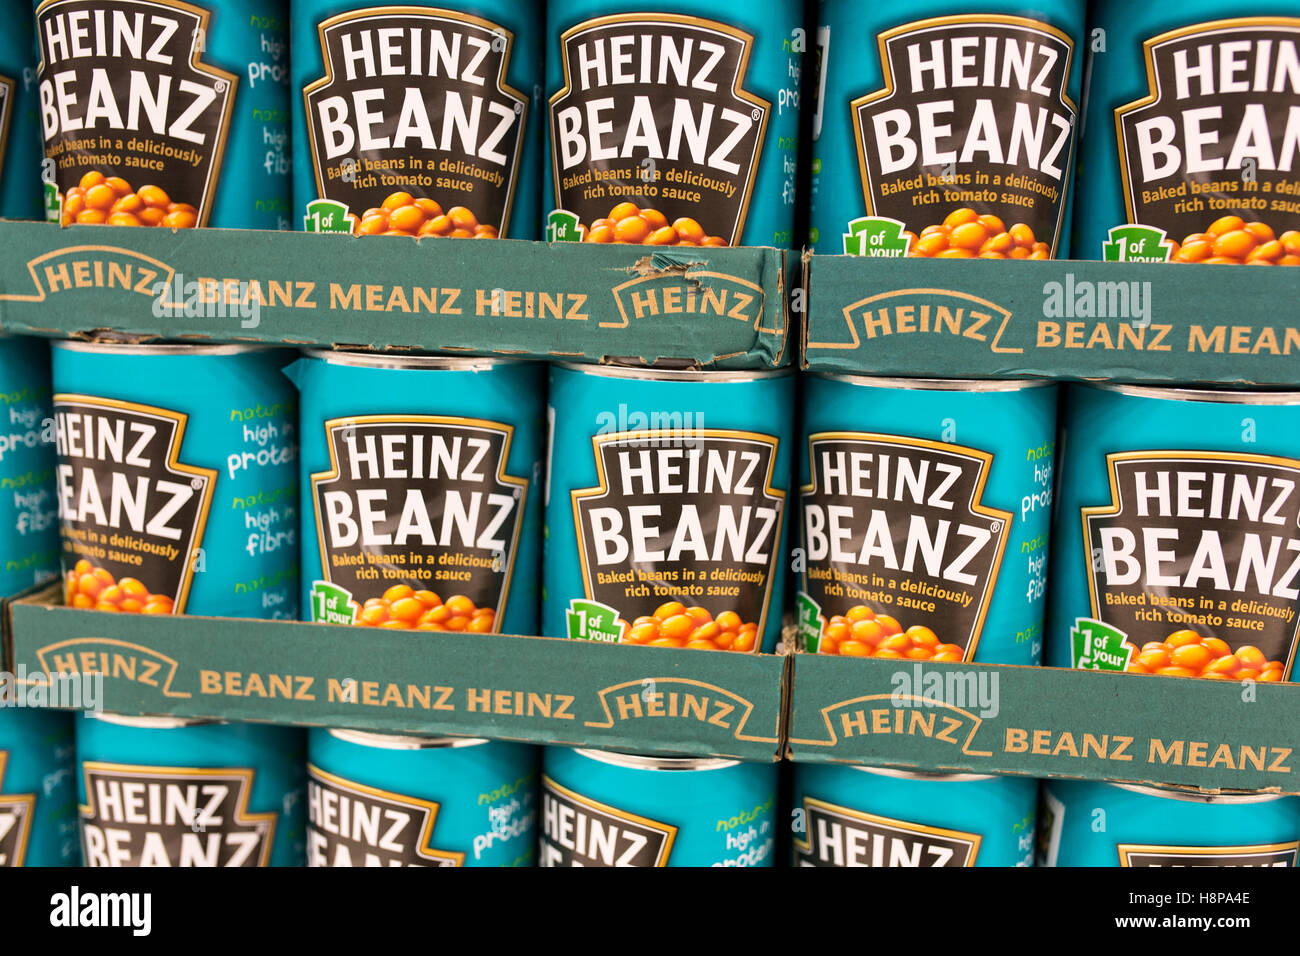 tins of Heinz baked beans on supermarket shelves Stock Photo